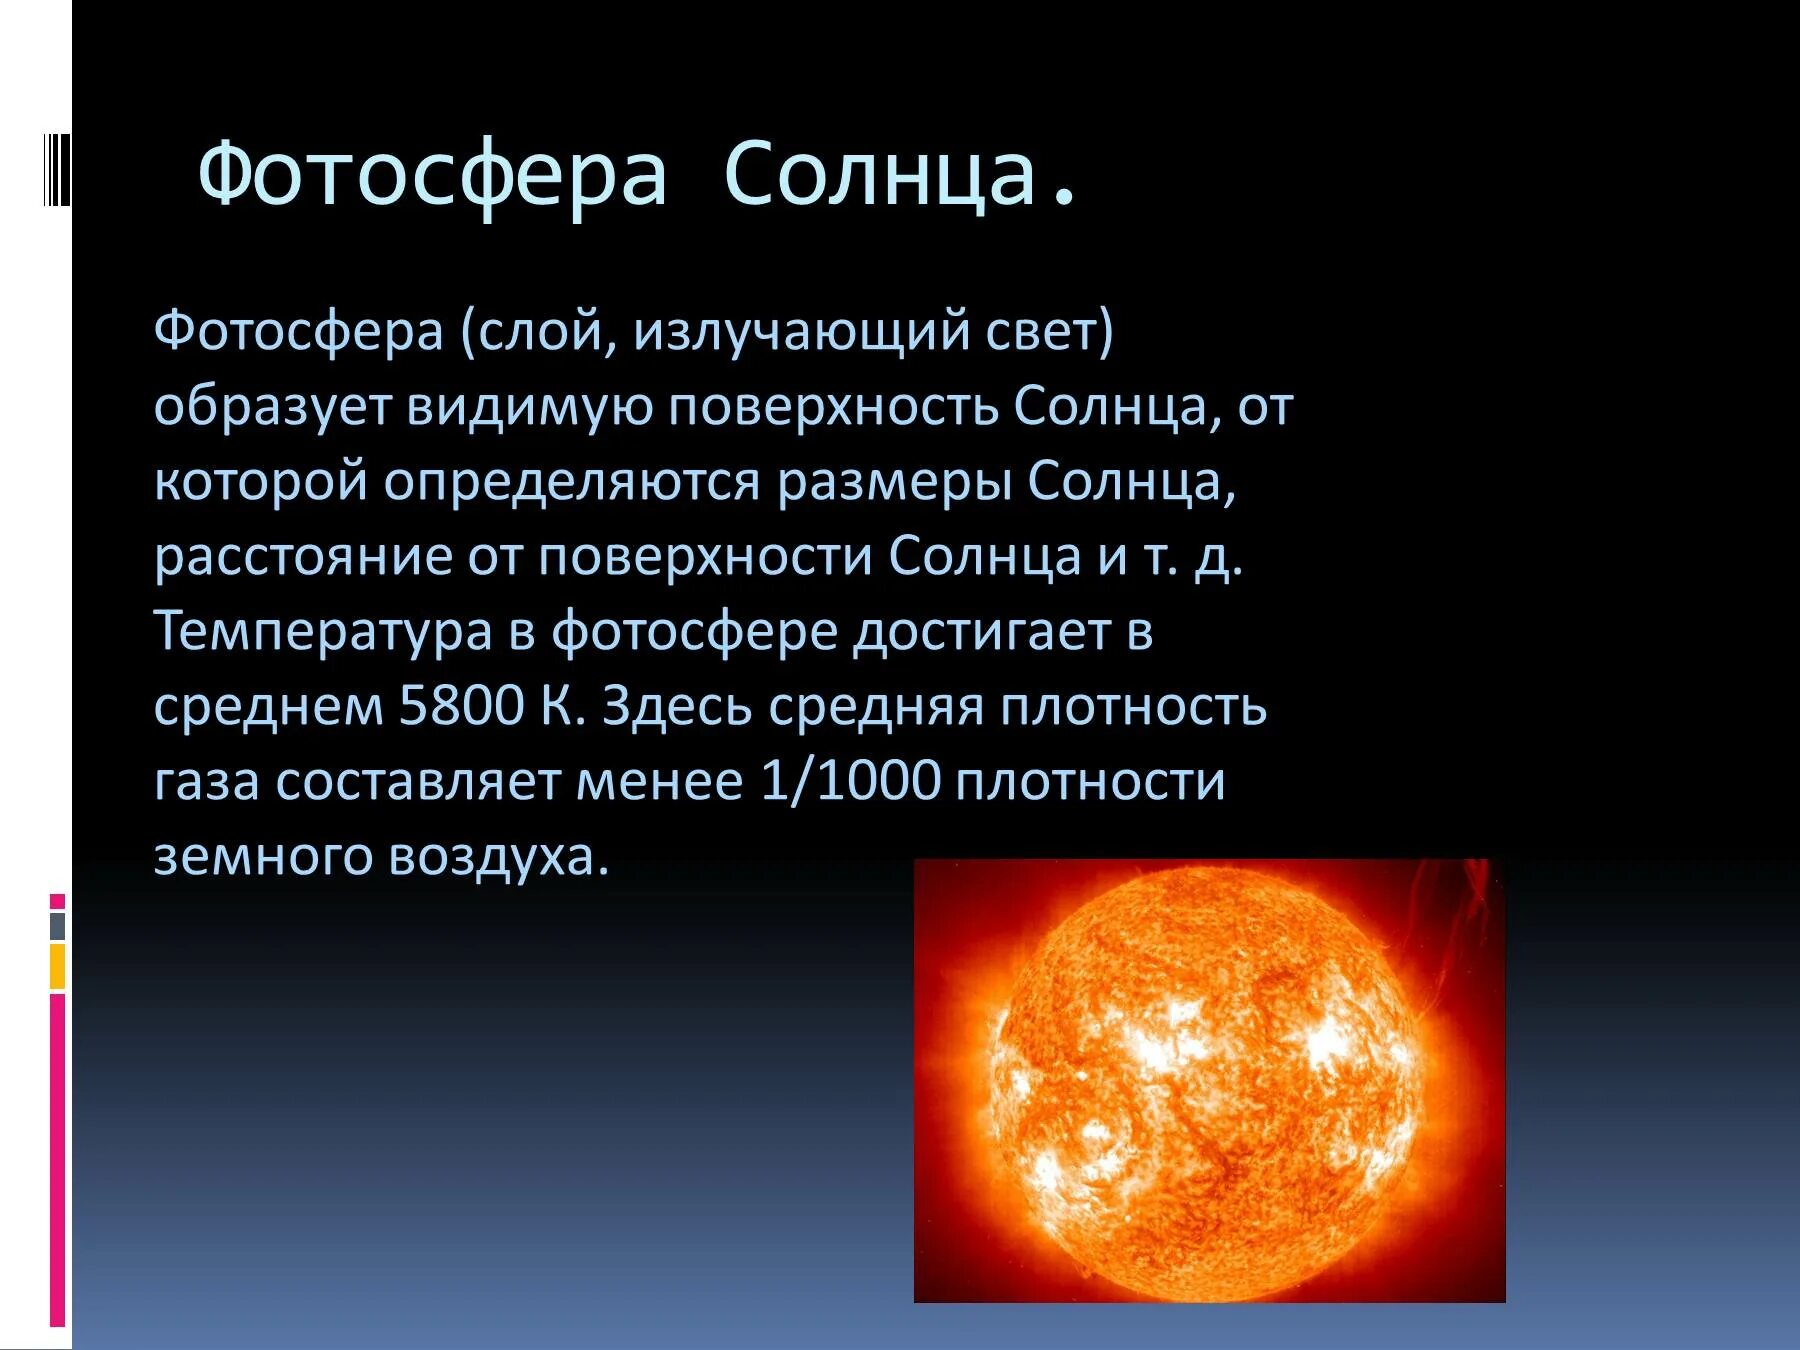 Строение звезды солнца. Строение солнца Фотосфера. Внутреннее строение солнца Фотосфера. Строение солнца хромосфера. Описание солнца.